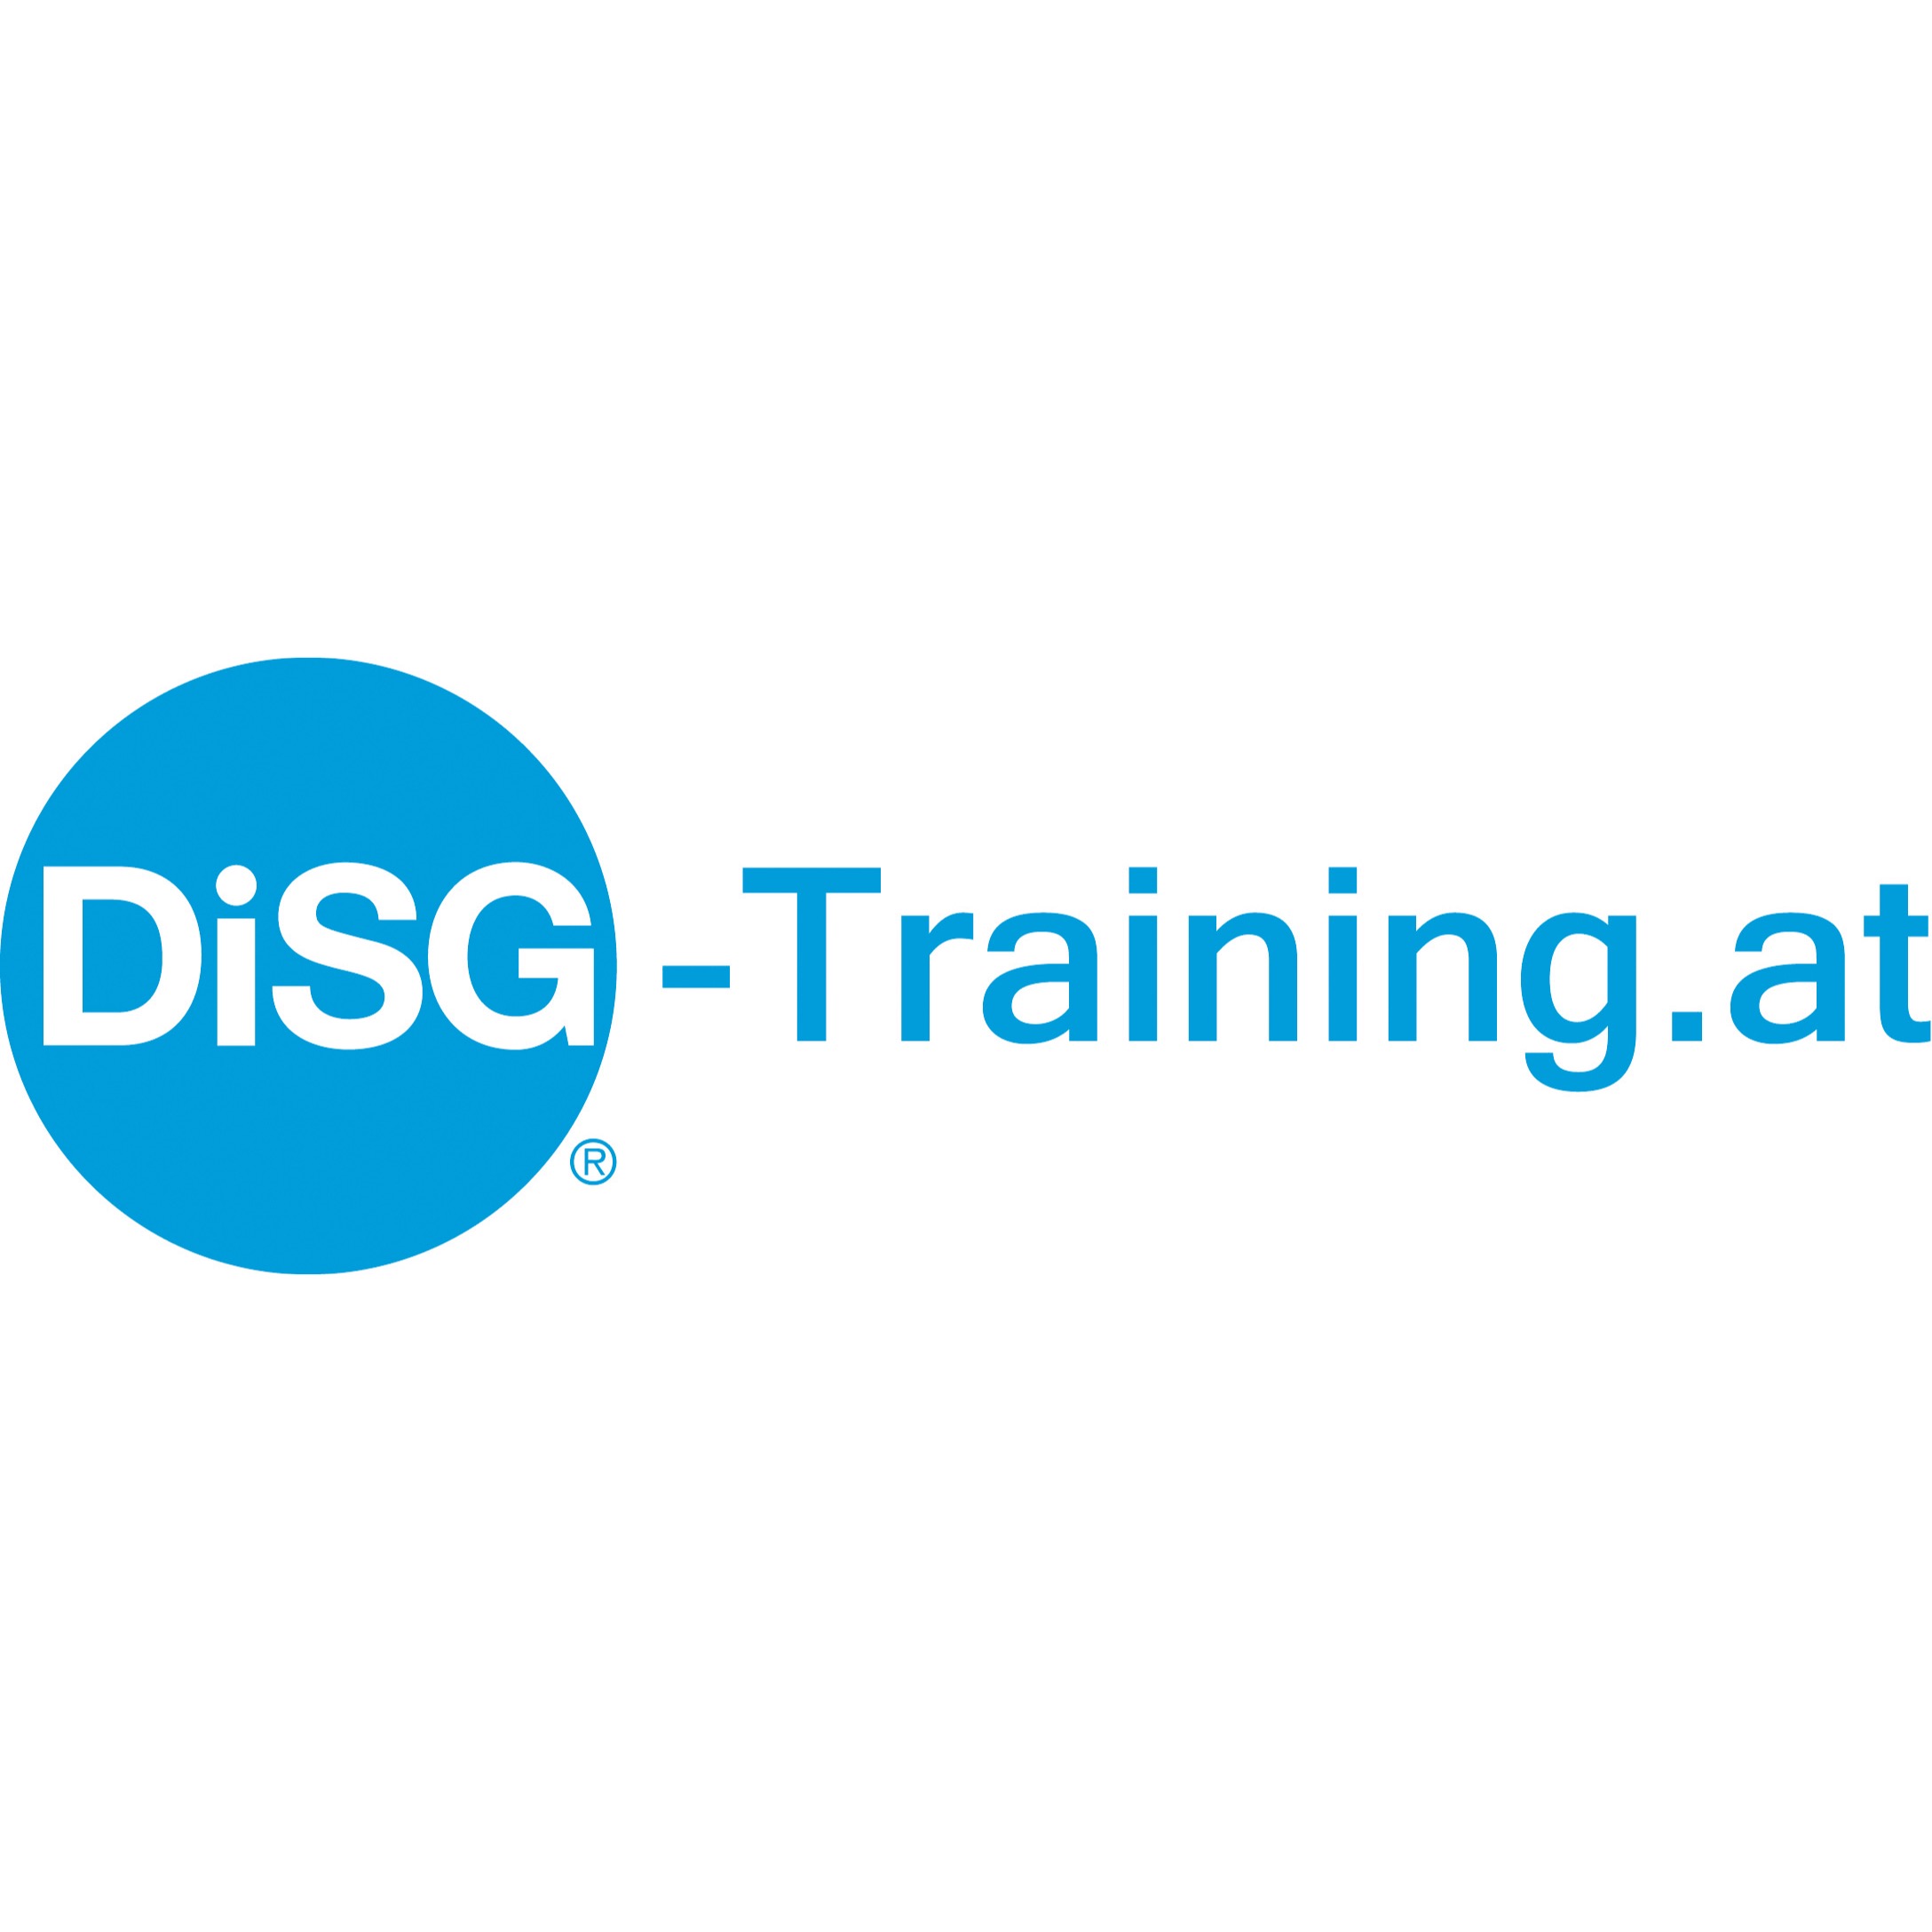 disg-training.at